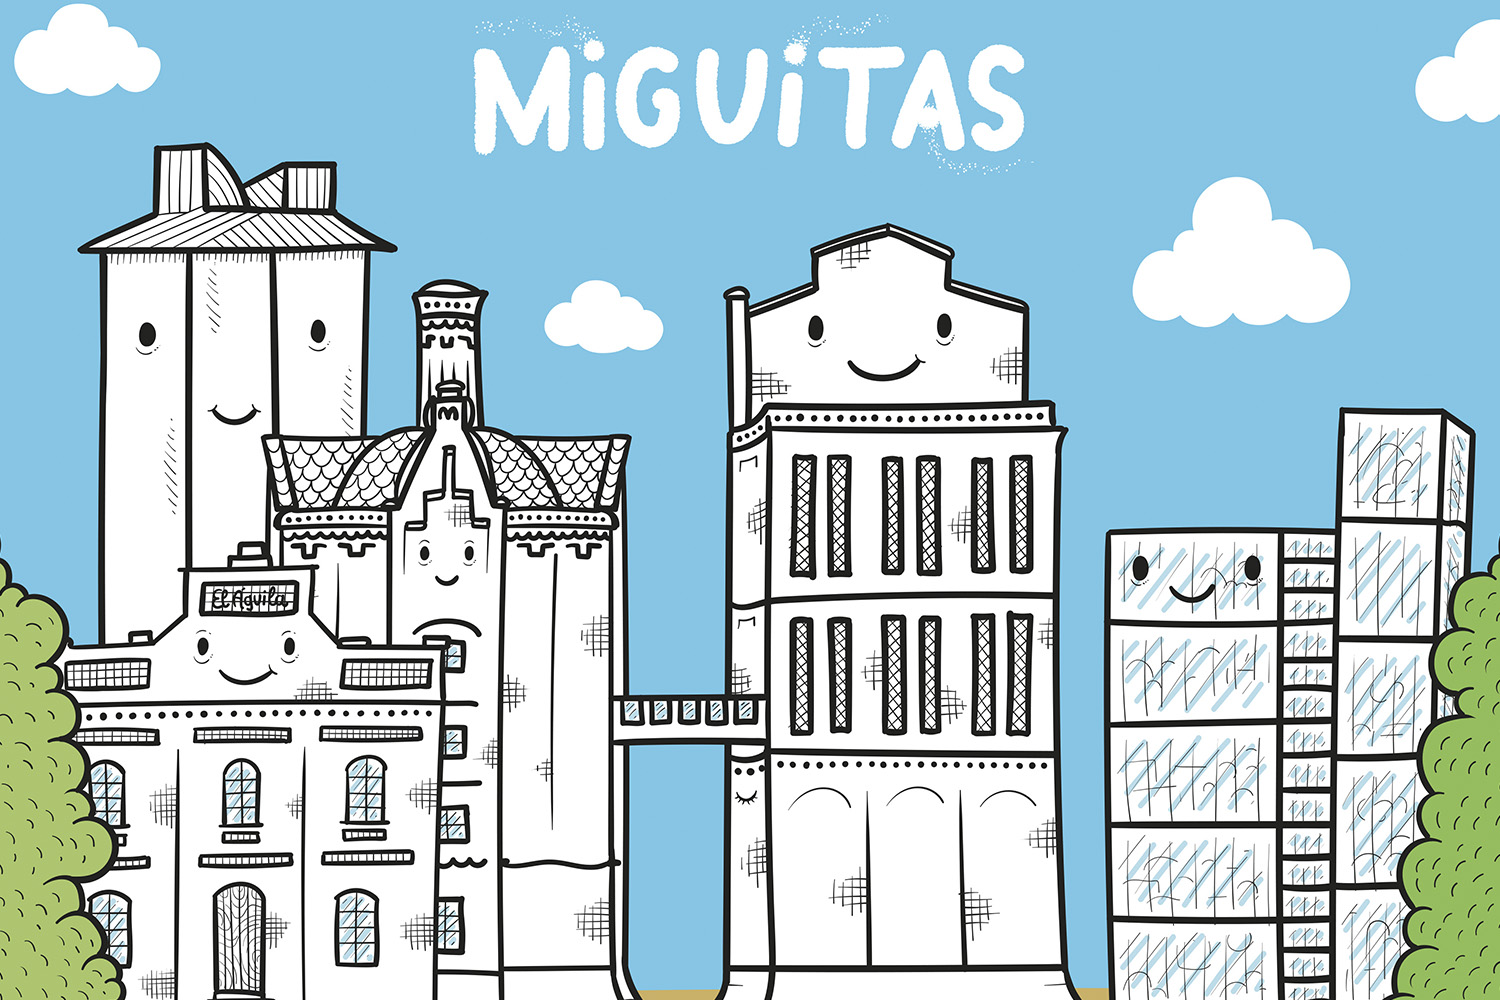 Miguitas: guided tours through the neighborhood of Arganzuela